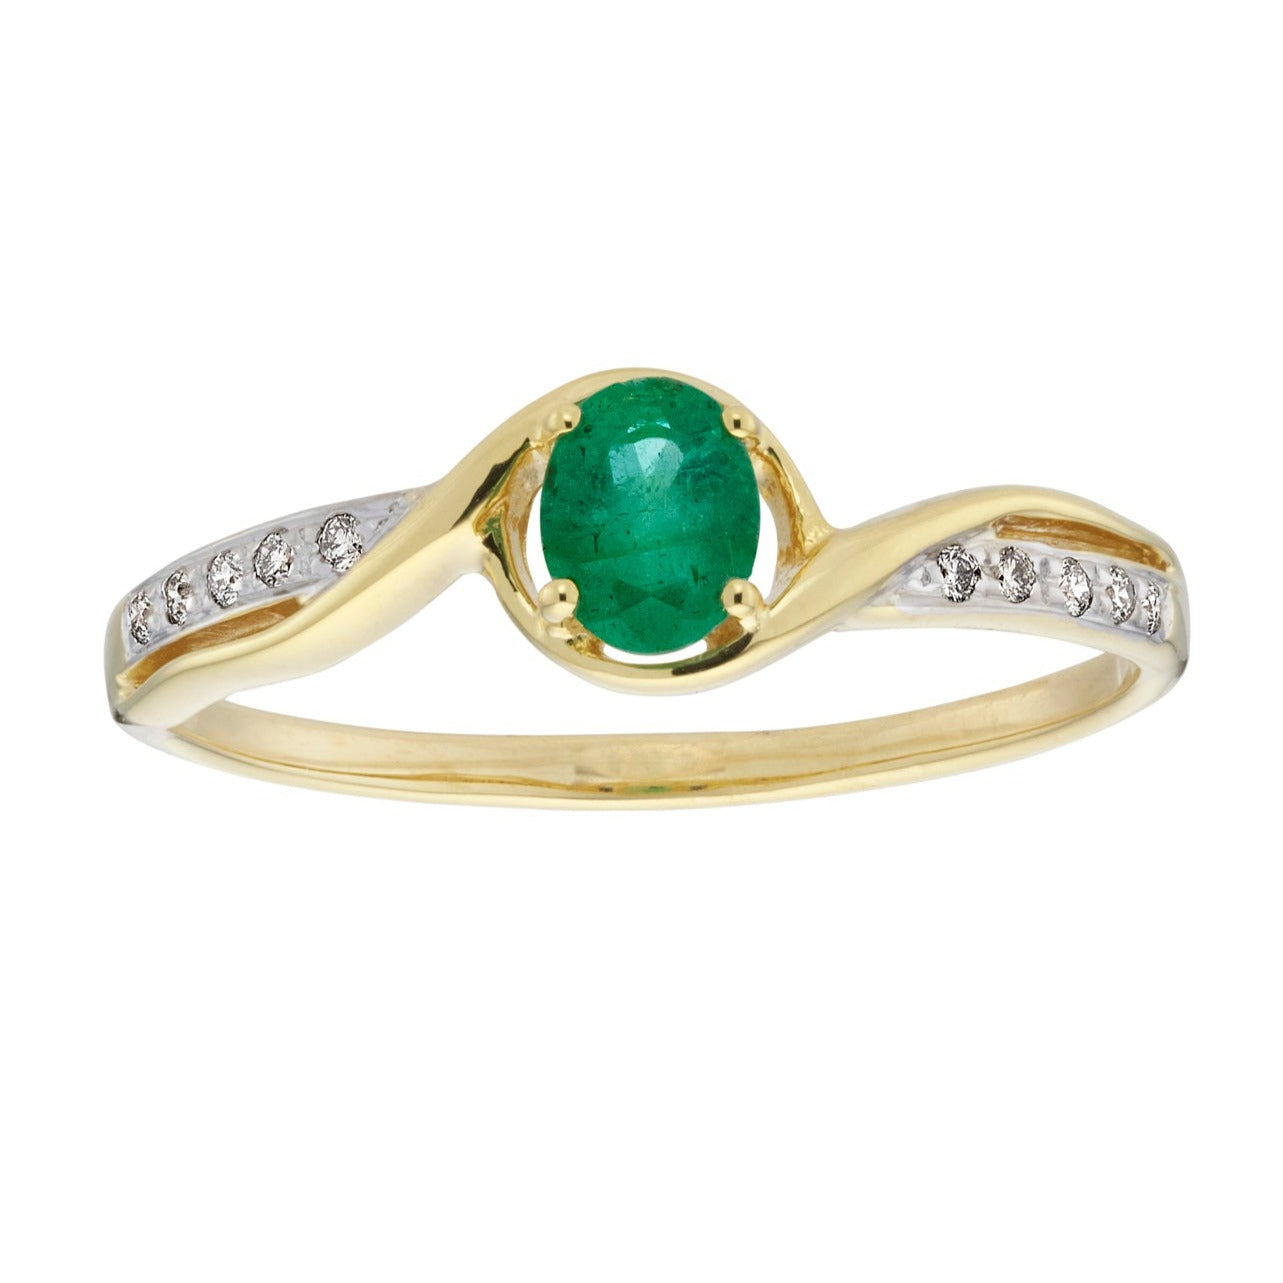 9ct gold 5x4mm oval emerald & diamond ring 0.04ct